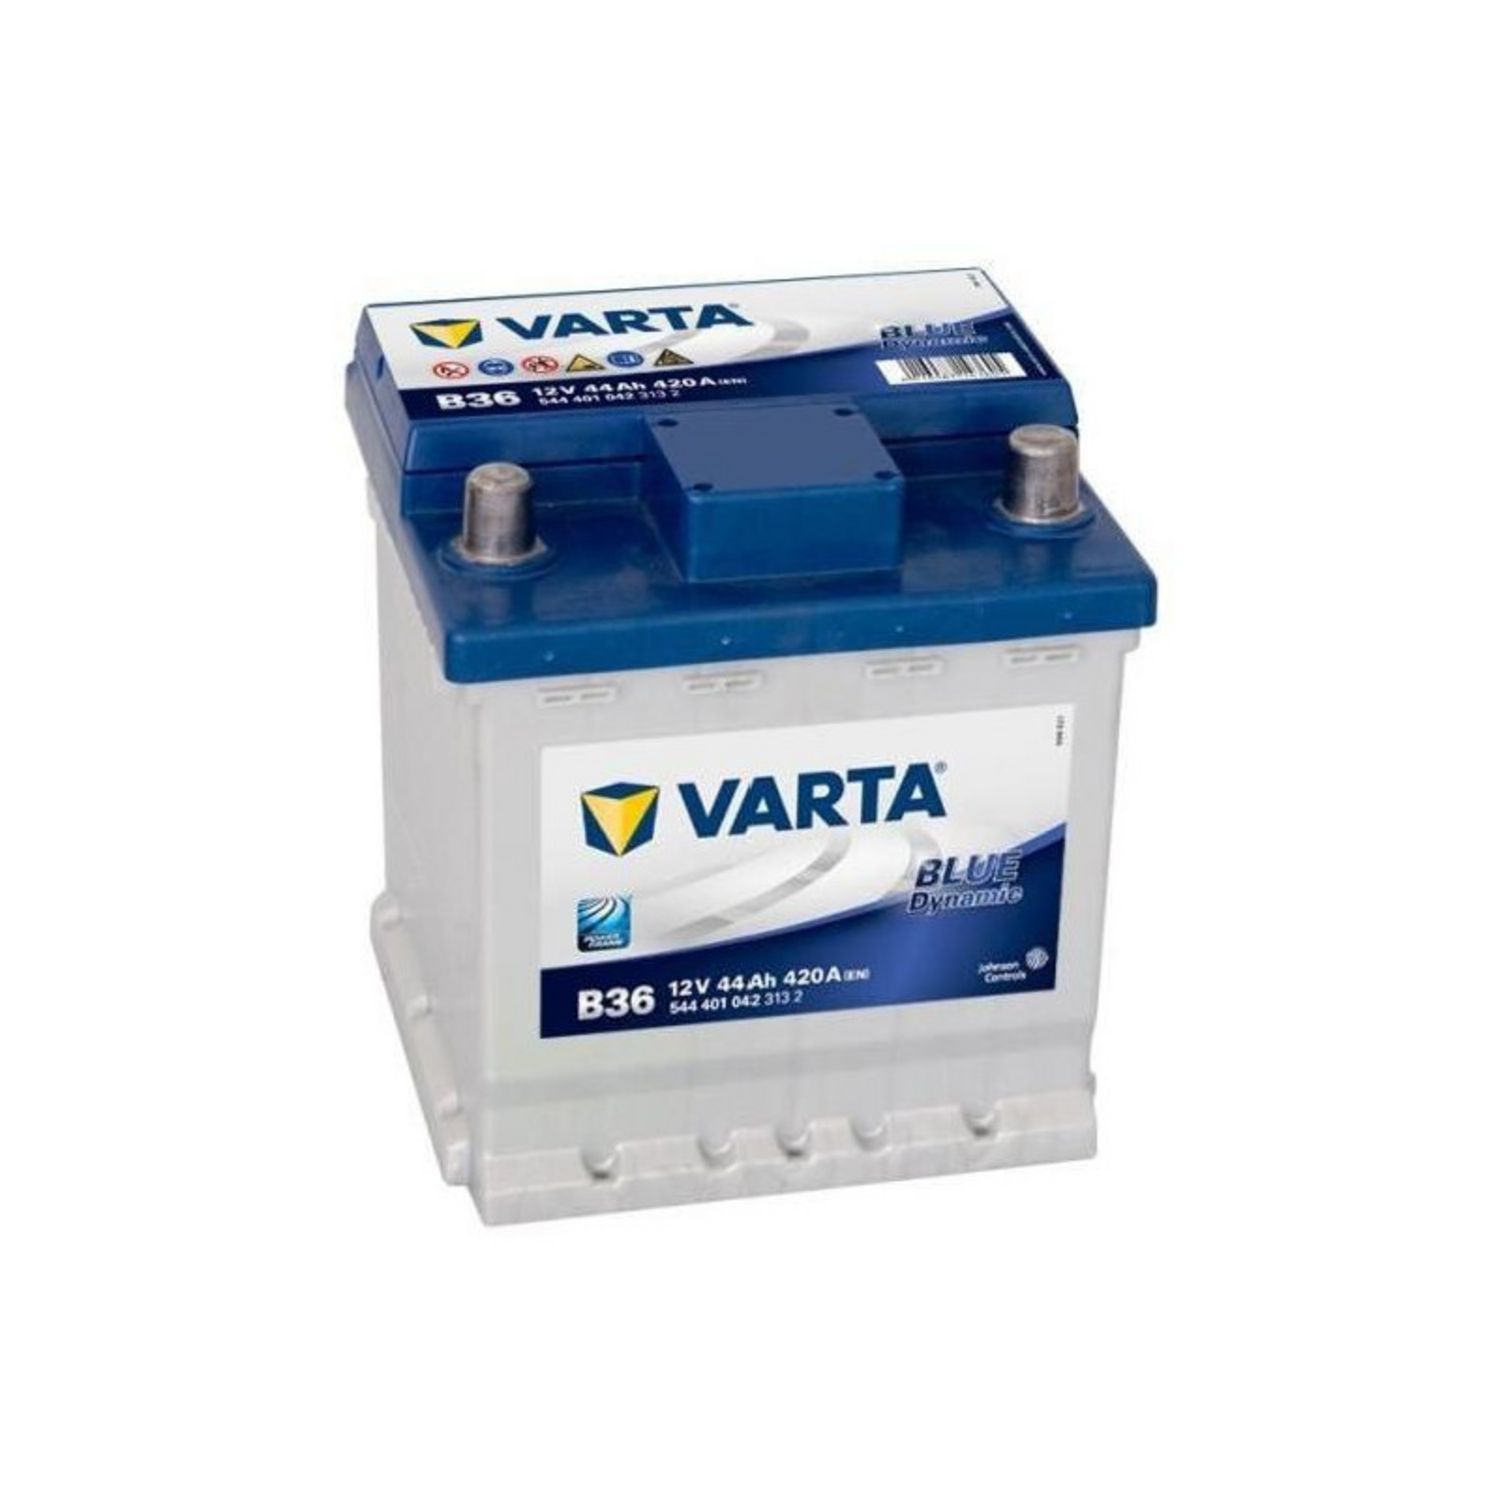 Varta Batterie Varta Blue Dynamic B36 12v 44ah 420A 544 401 042 pas cher 